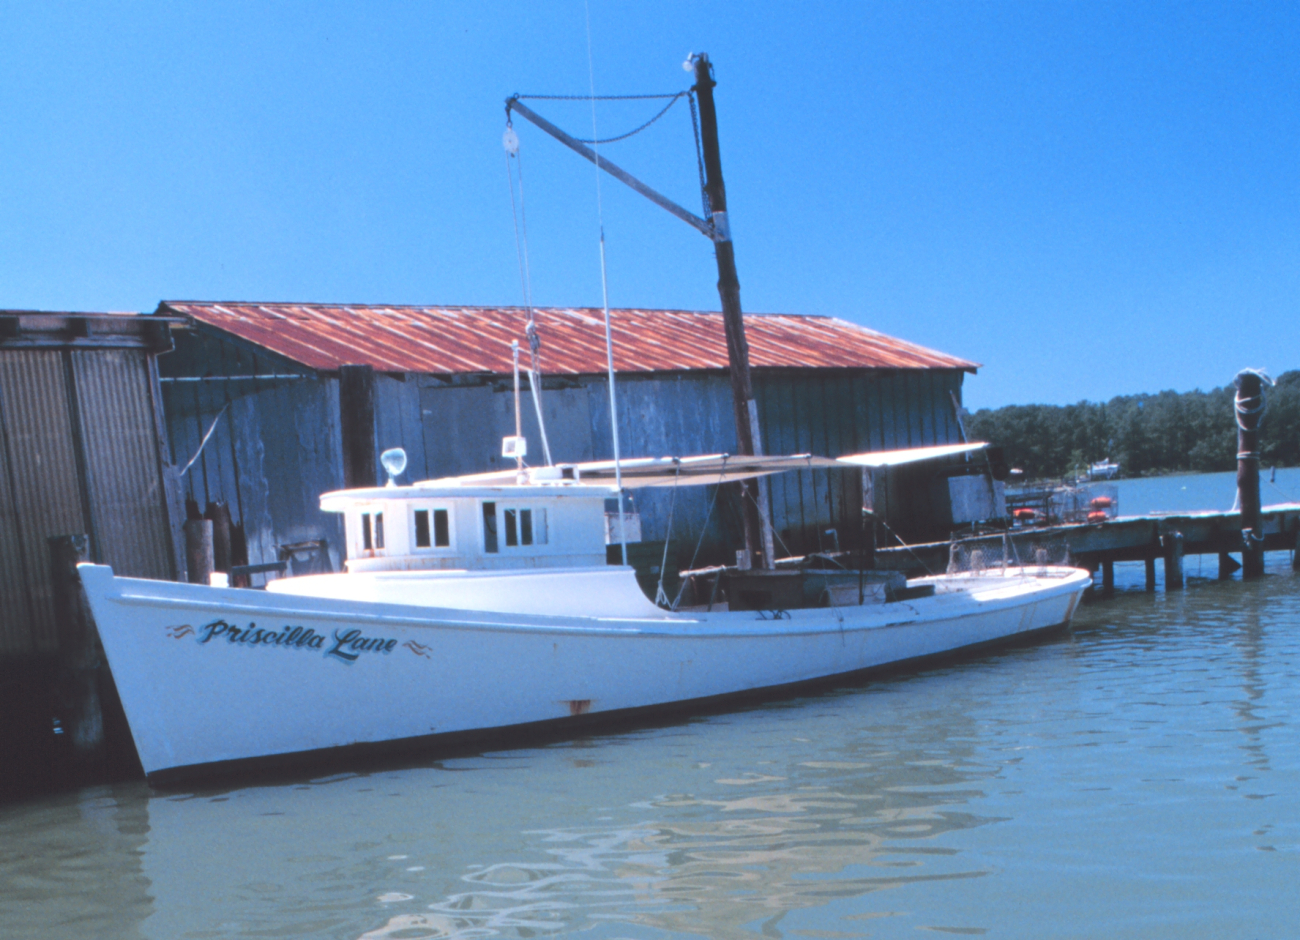 F/V PRISCILLA LANE is a Chesapeake Bay waterman's boat built in 1955